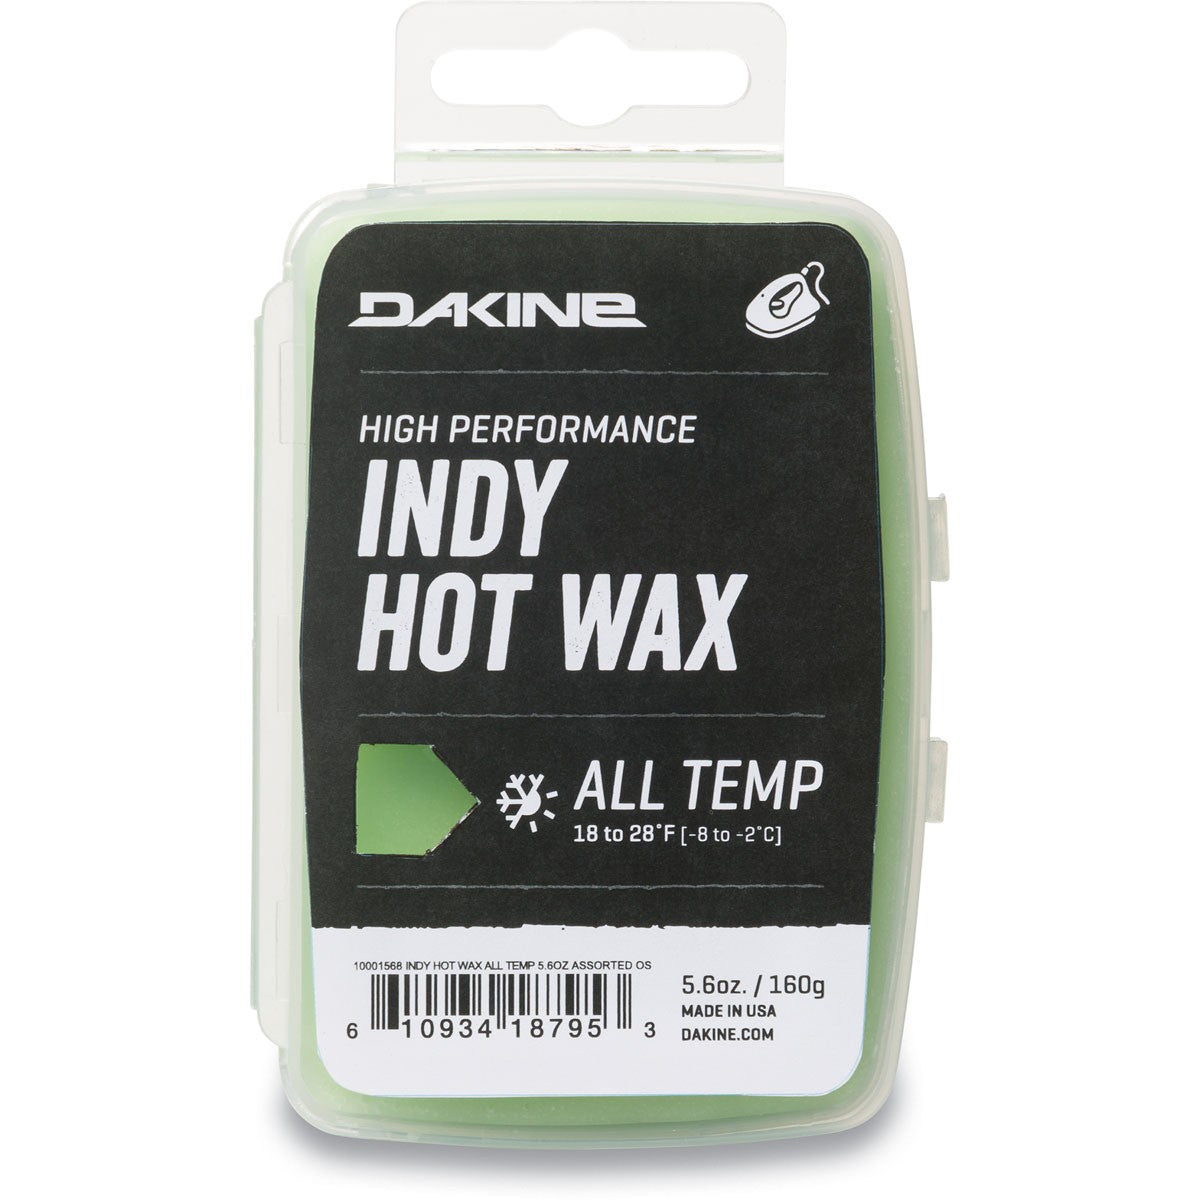 Dakine Indy Hot All Temp Snowboard Wax - 5.6 Oz image 1